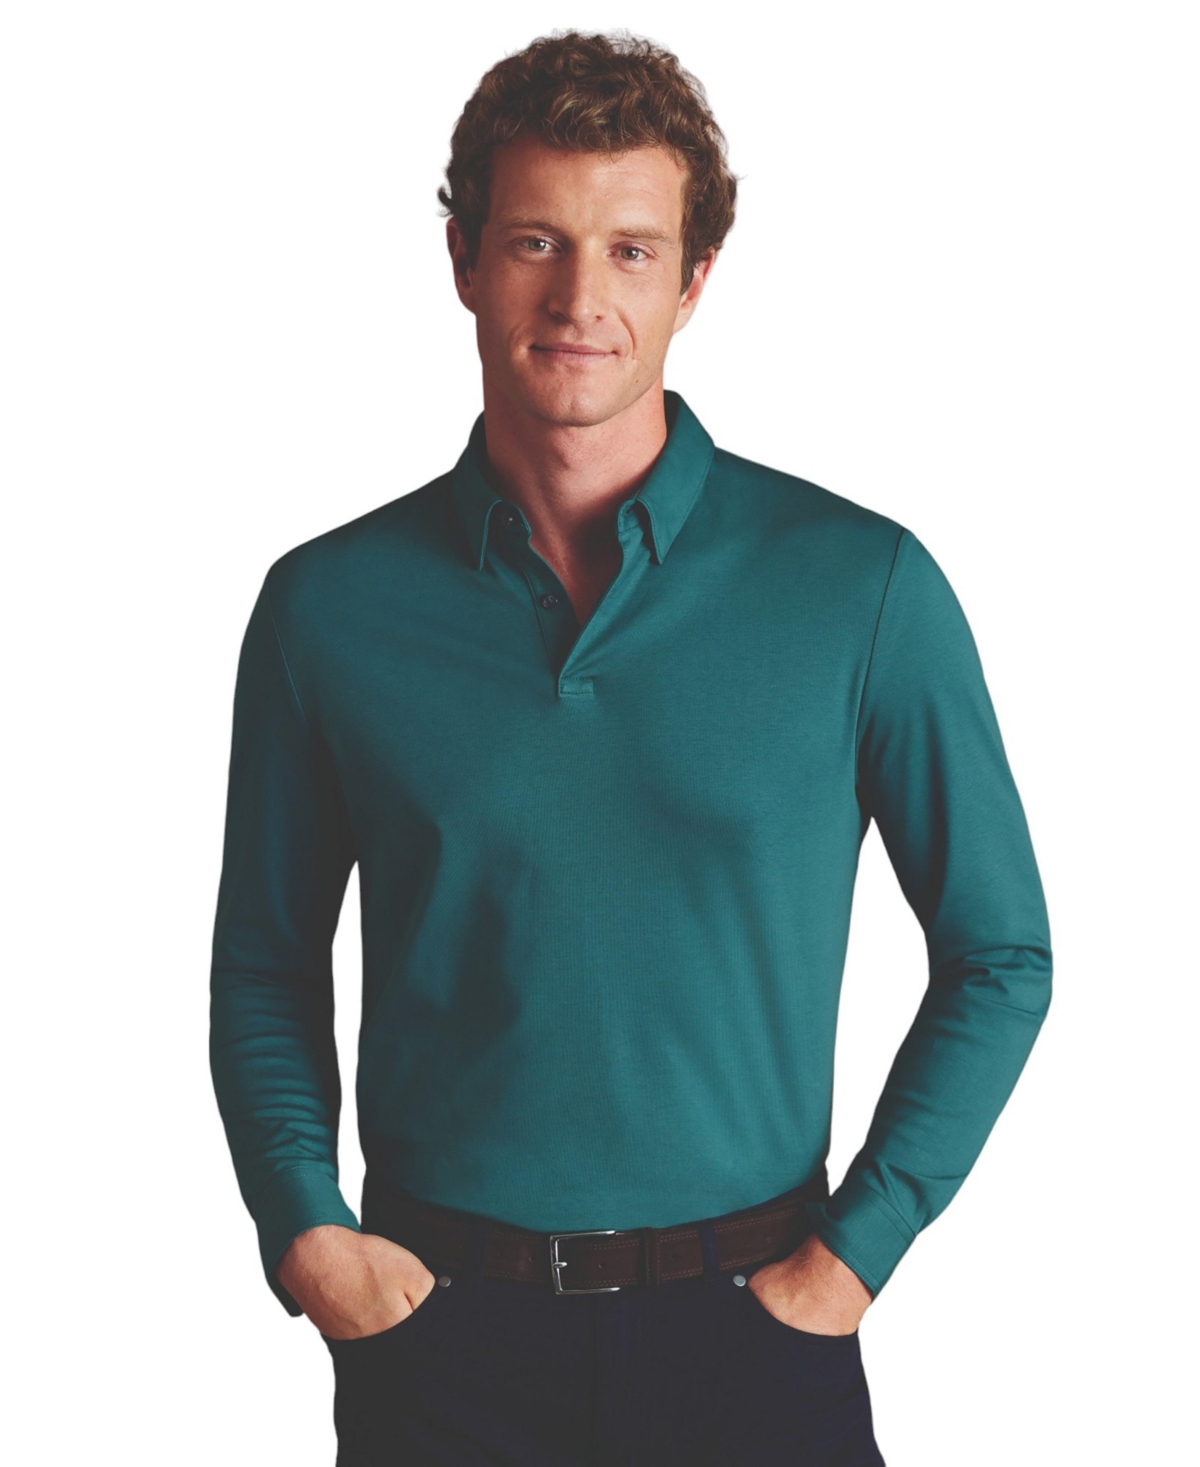 Men's Plain Long Sleeve Jersey Polo - Teal green